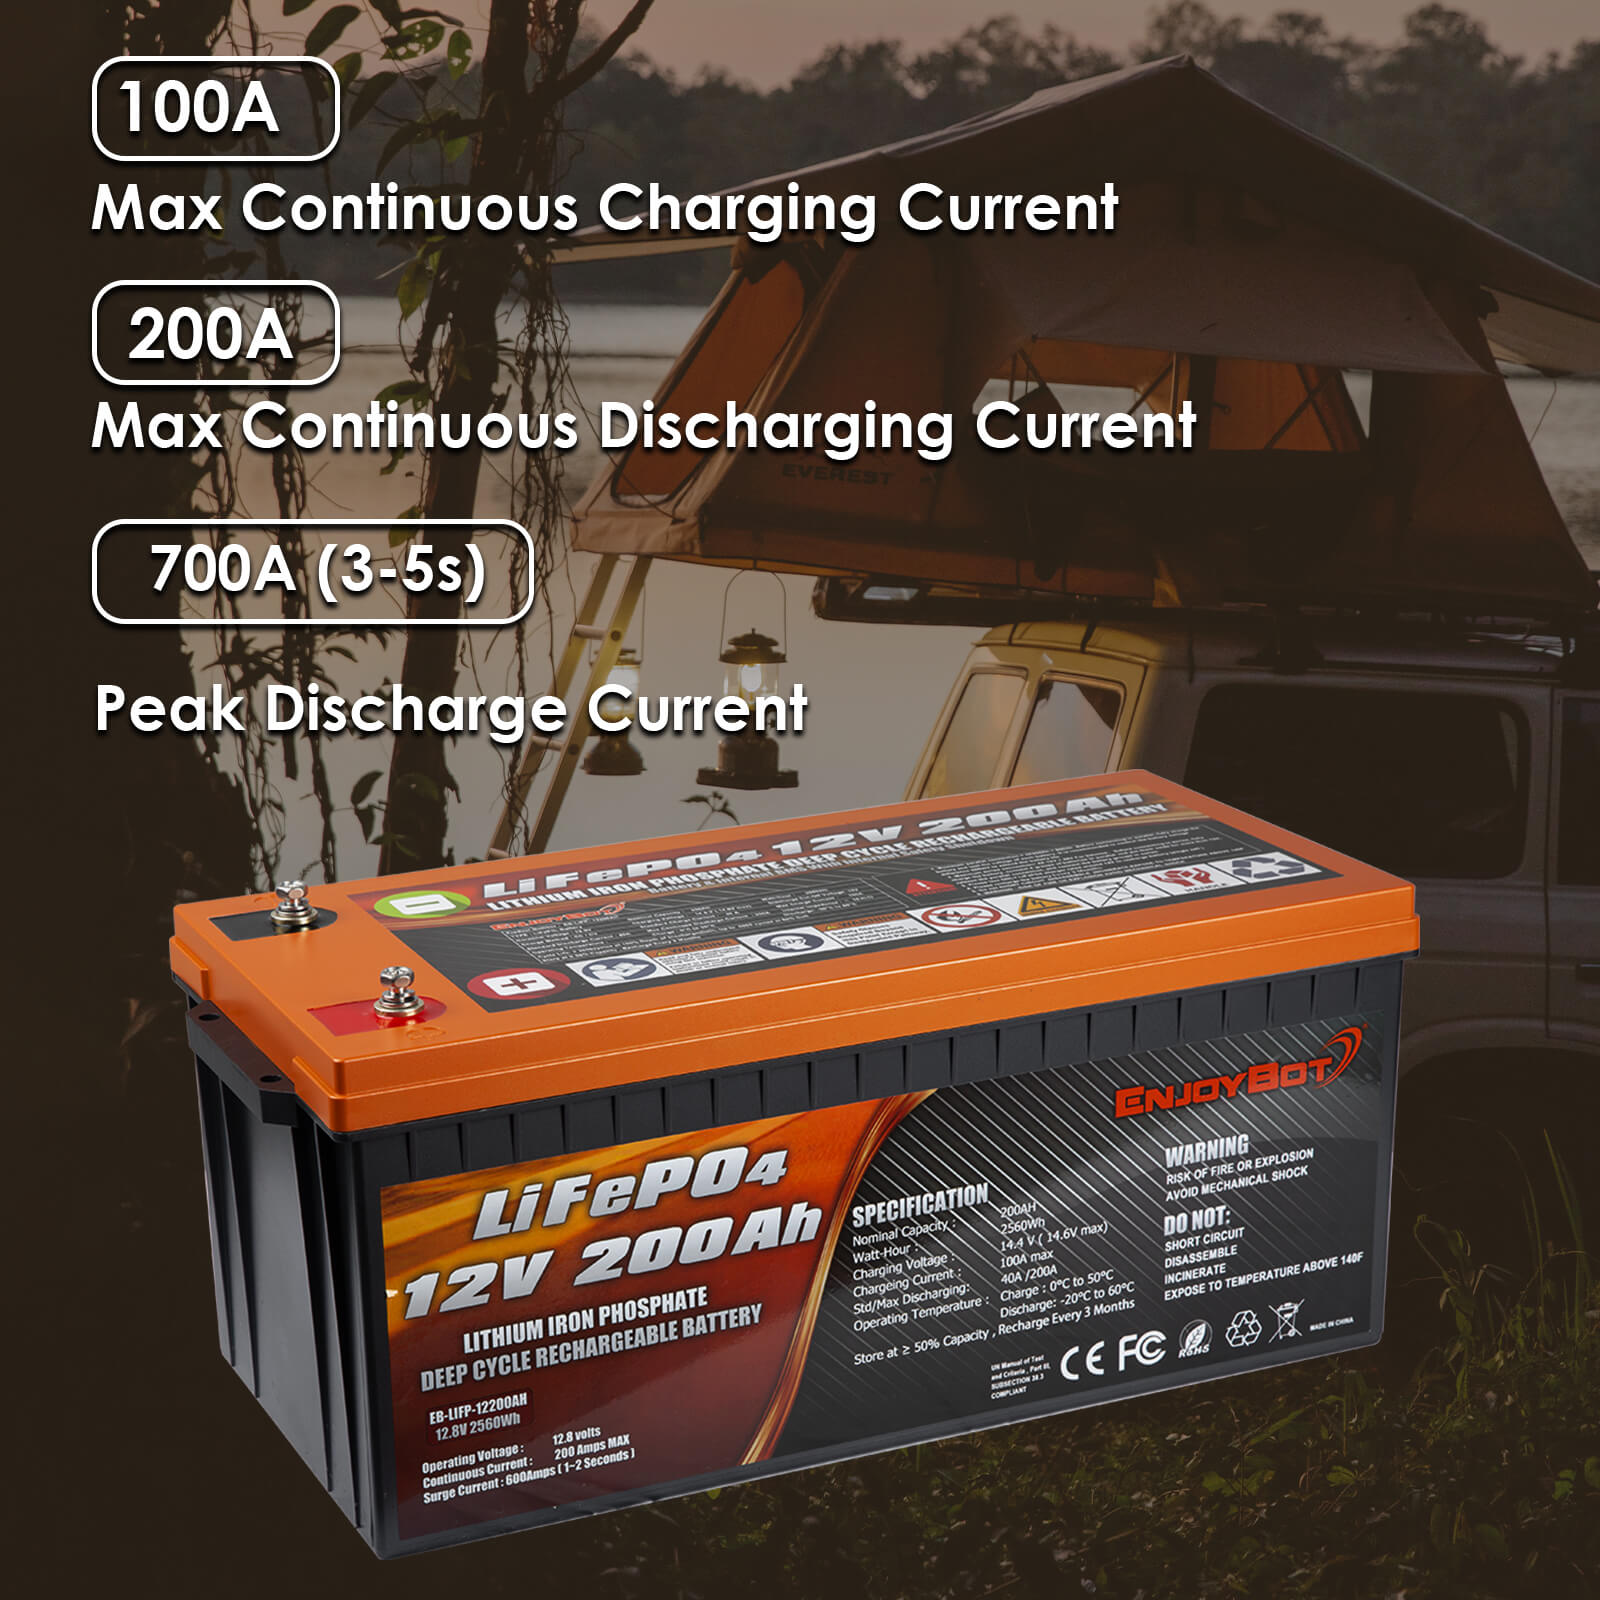 ENJOYBOT 12V 100AH LiFePO4 Lithium Battery, Group 31 Battery, 1280